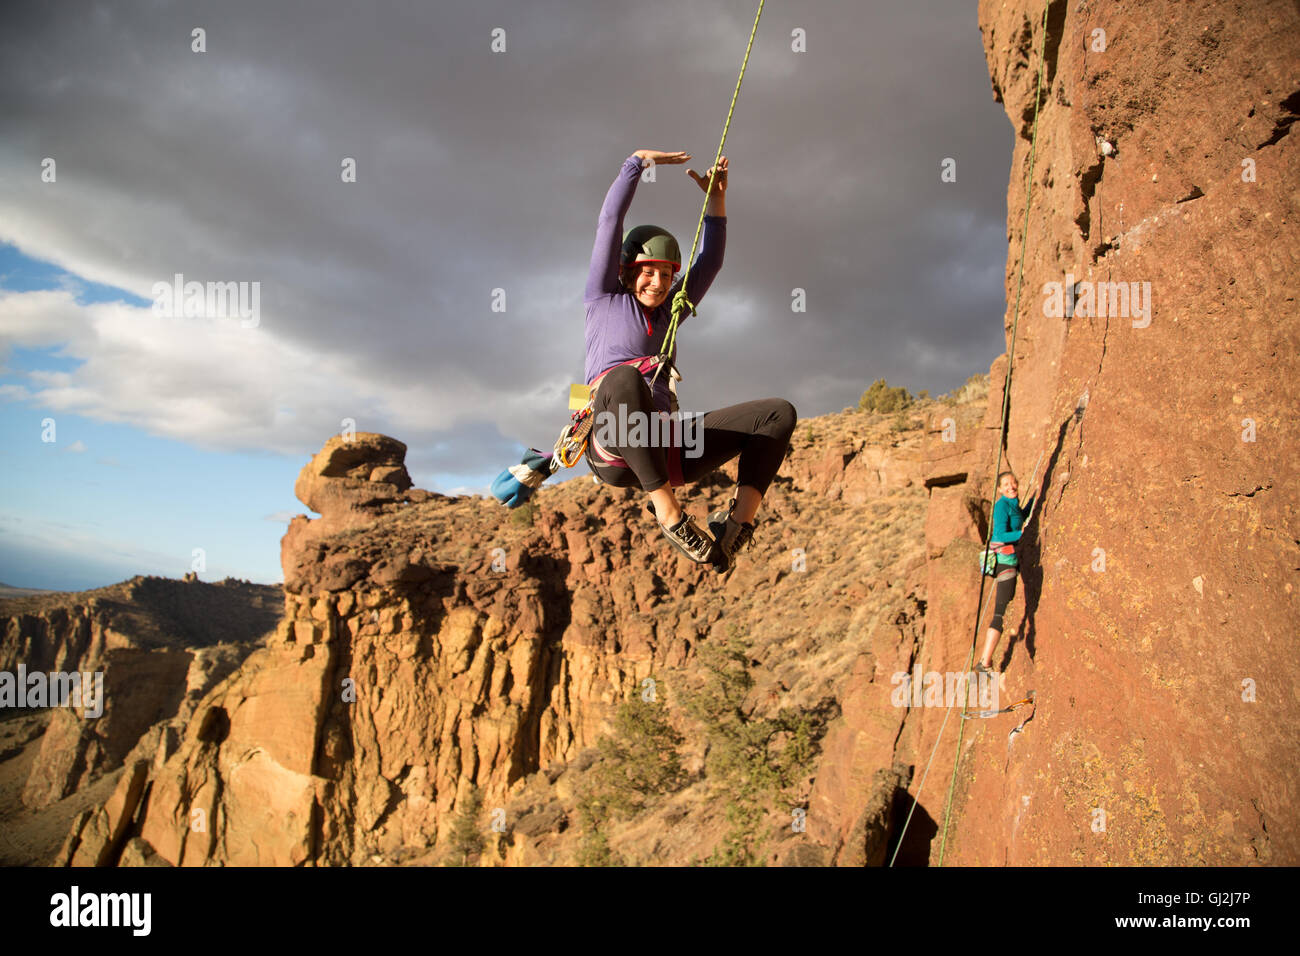 Woman rock climbing swinging on climbing rope Stock Photo